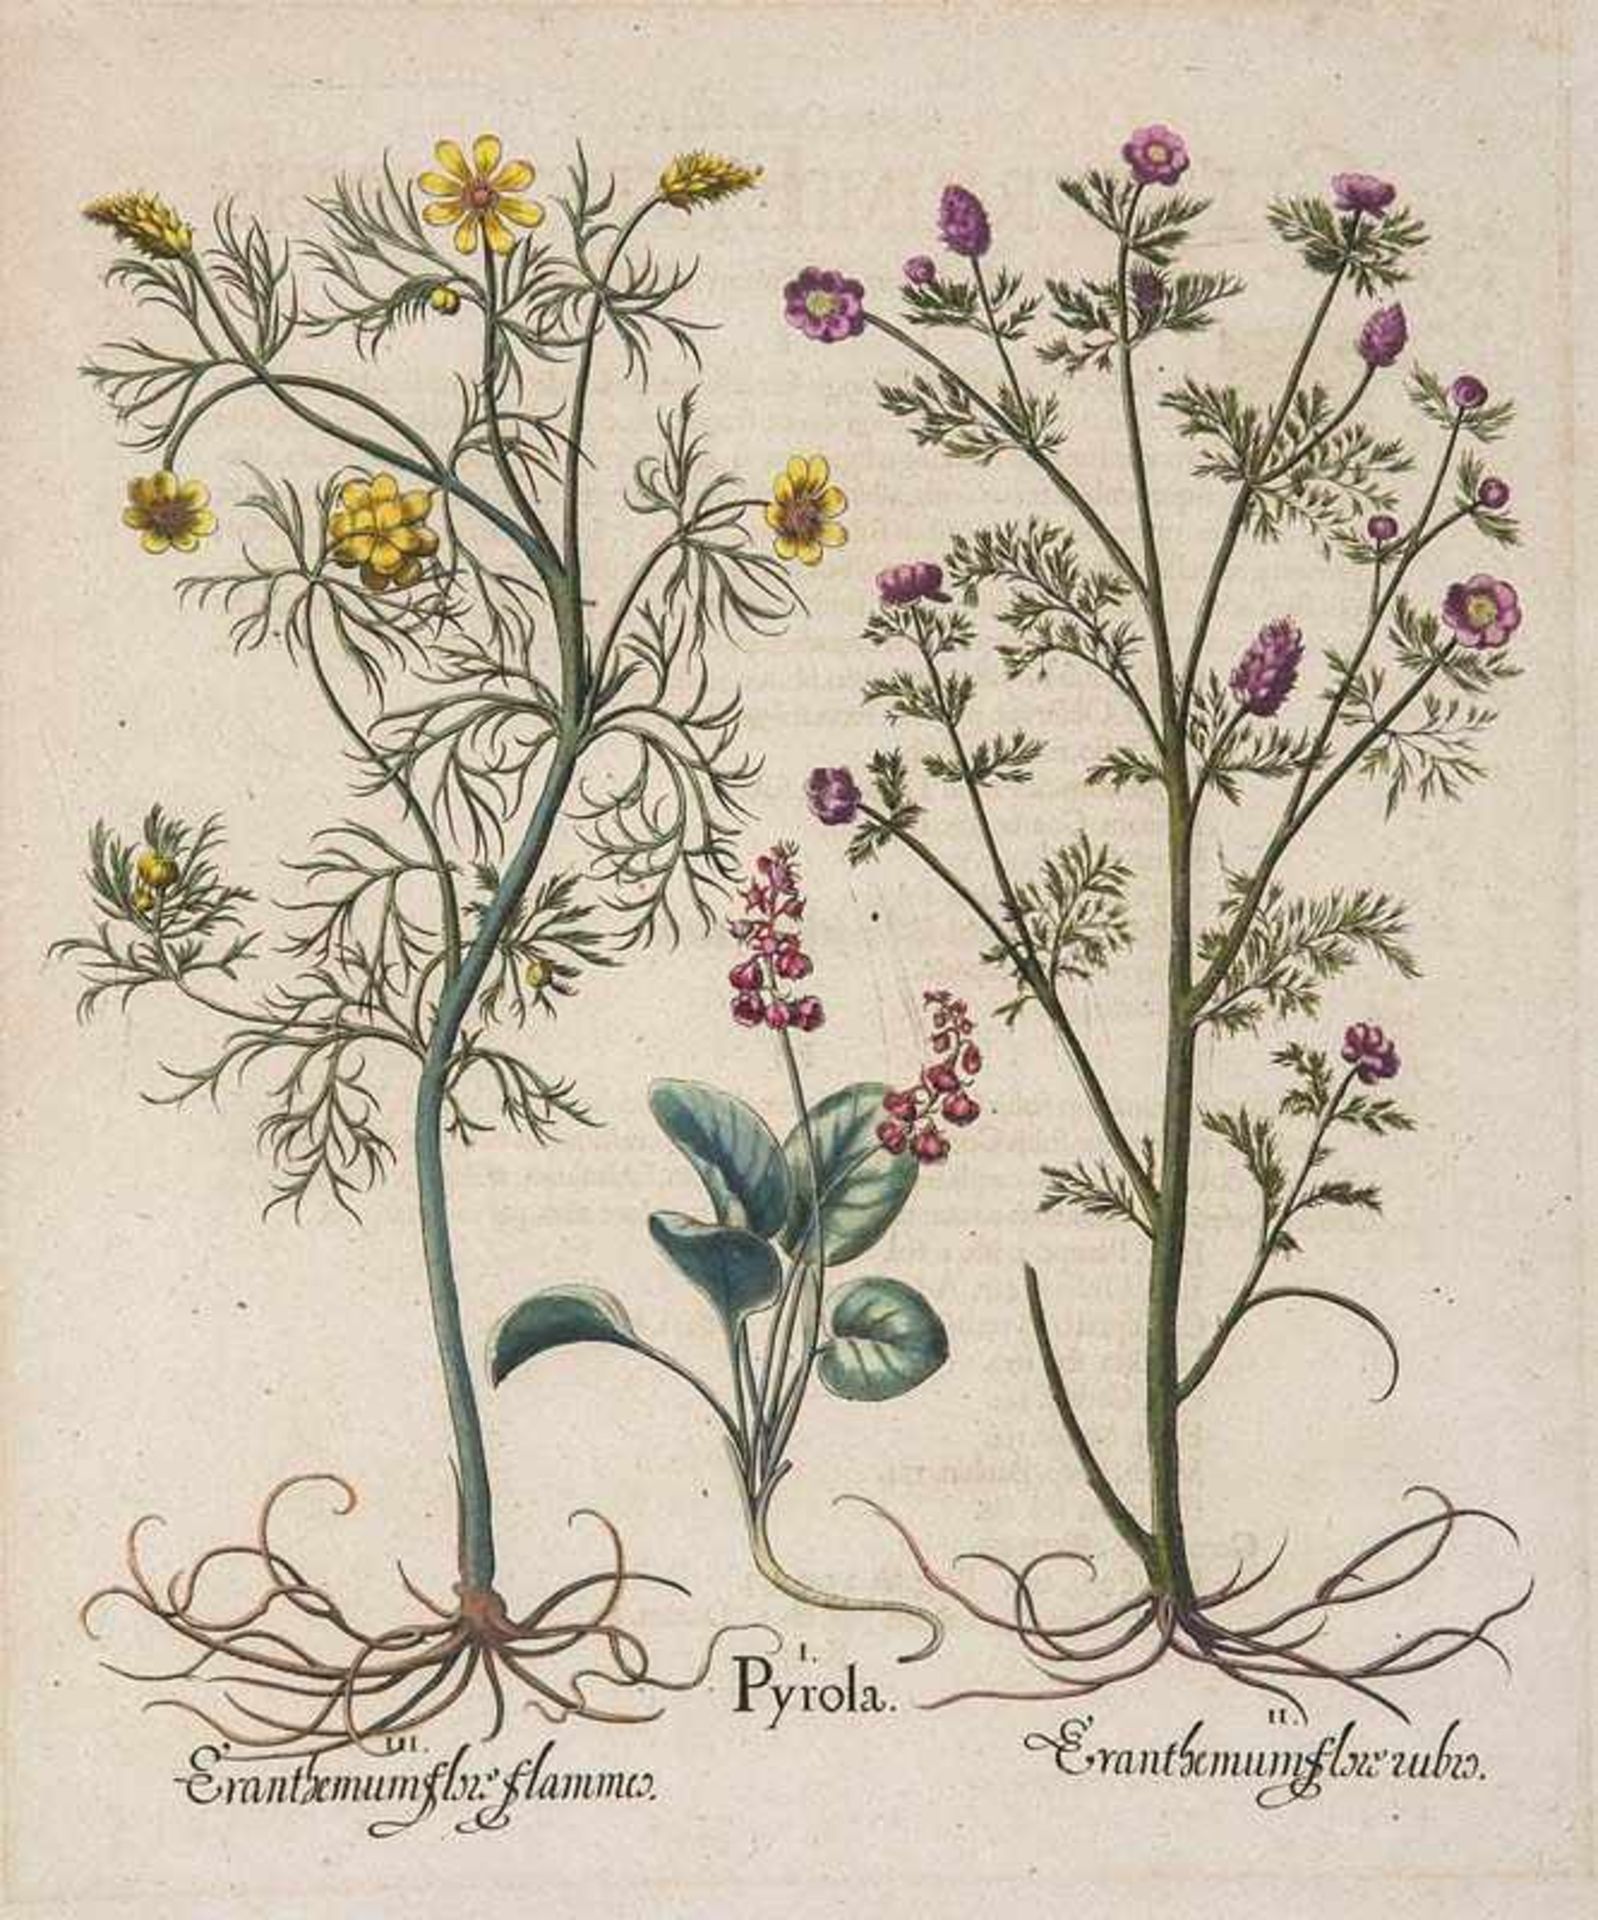 Besler, Basilius. Wintergrün. Eranthemum. I. Pyrola. II. Eranthemum flore rubro. III. Eranthemum